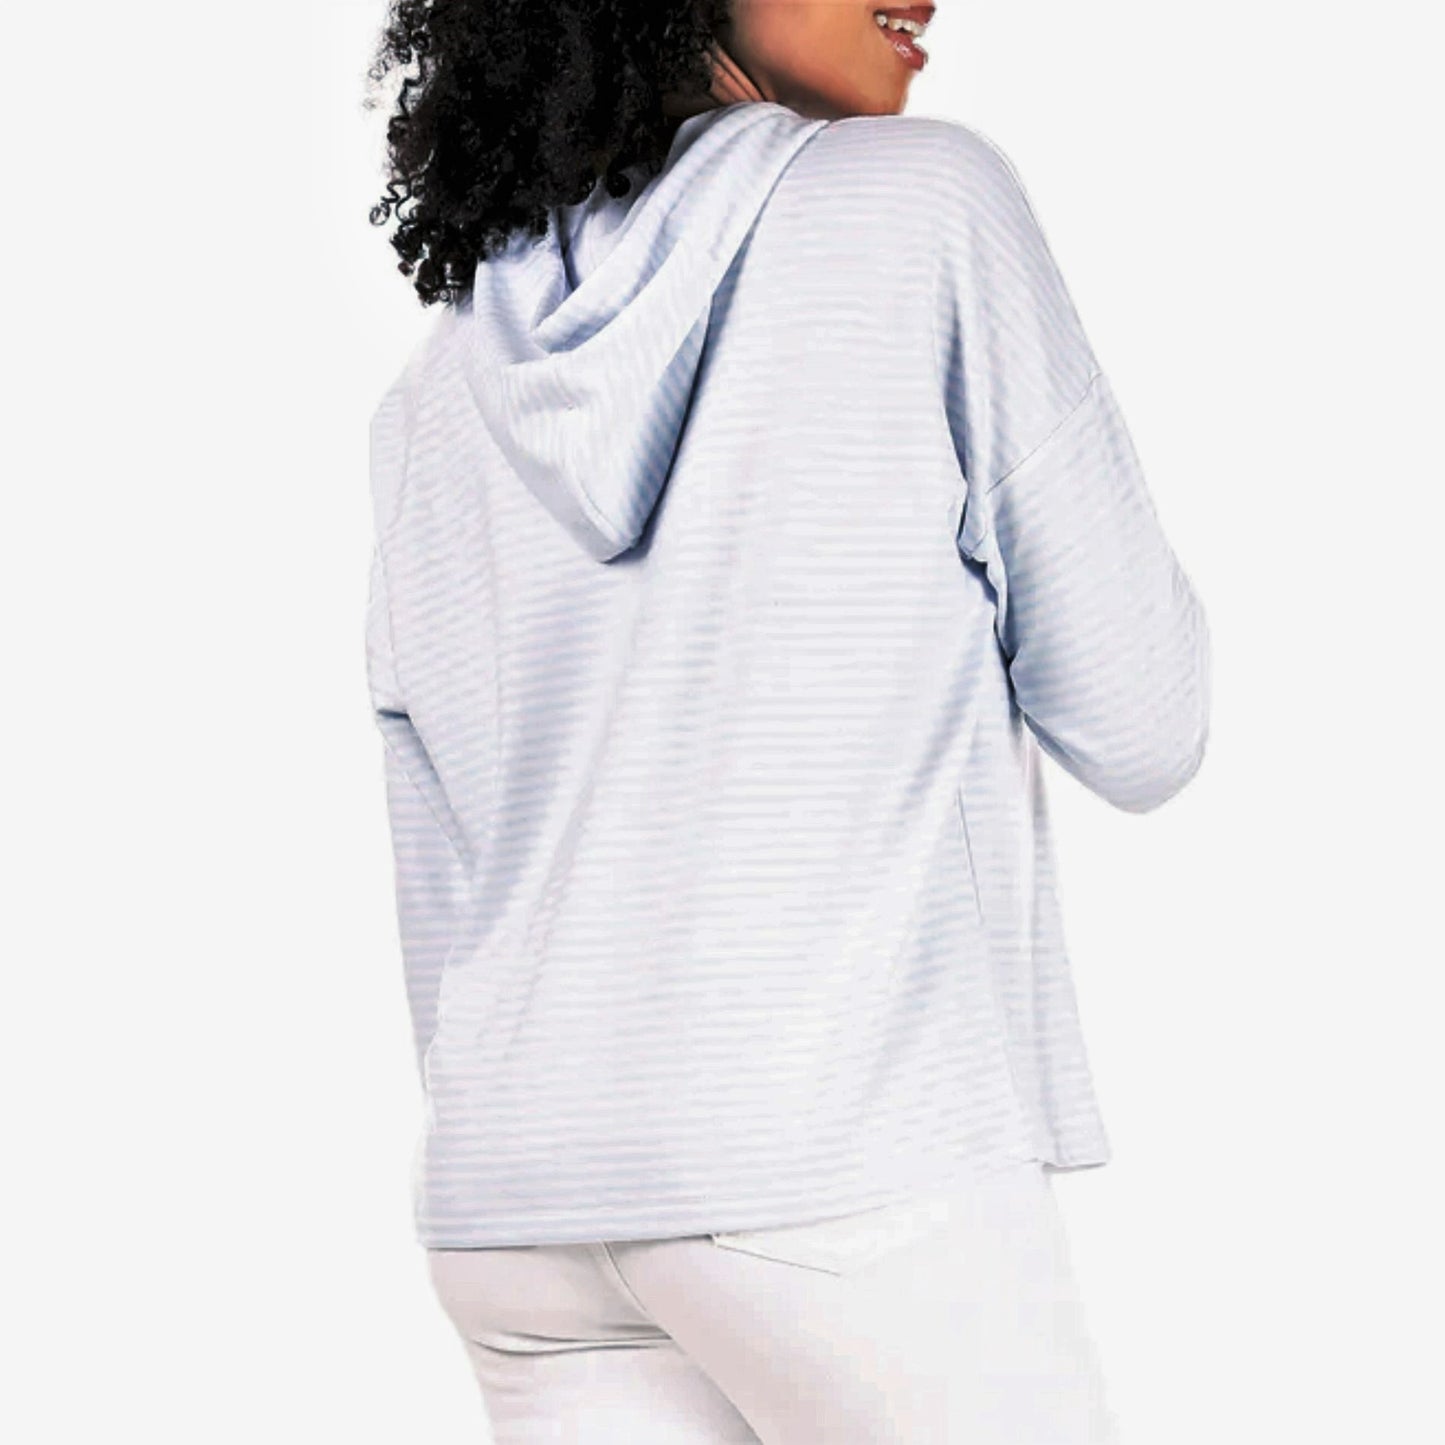 Rae Dunn Women's Ultra Soft Explore More Graphic Print Striped Sweatshirt Top Hoodie